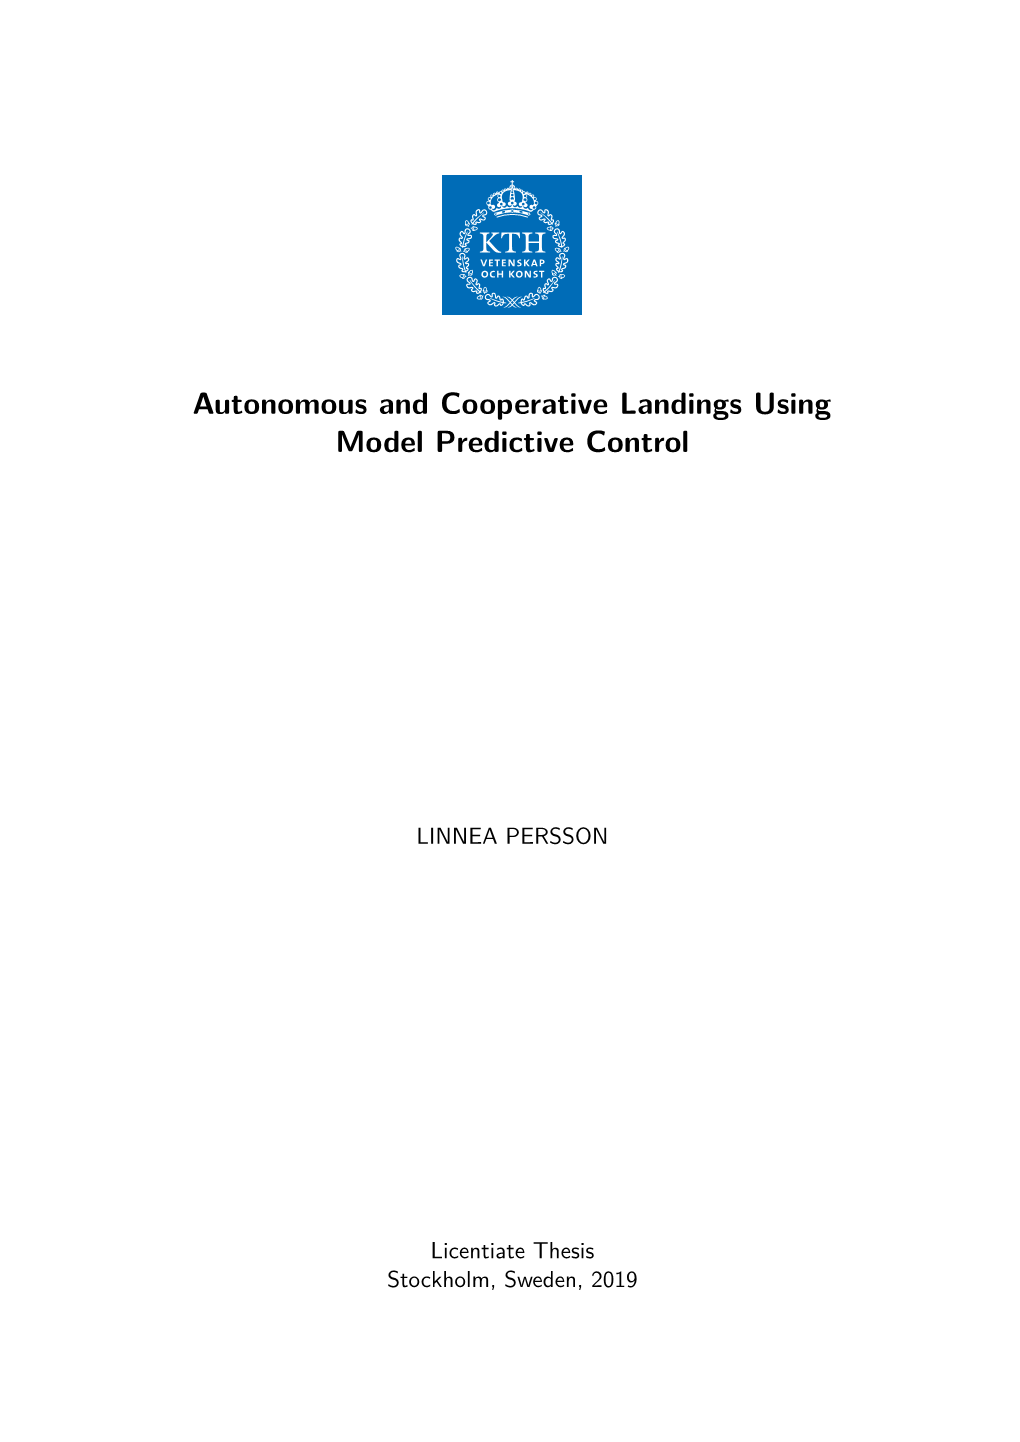 Autonomous and Cooperative Landings Using Model Predictive Control